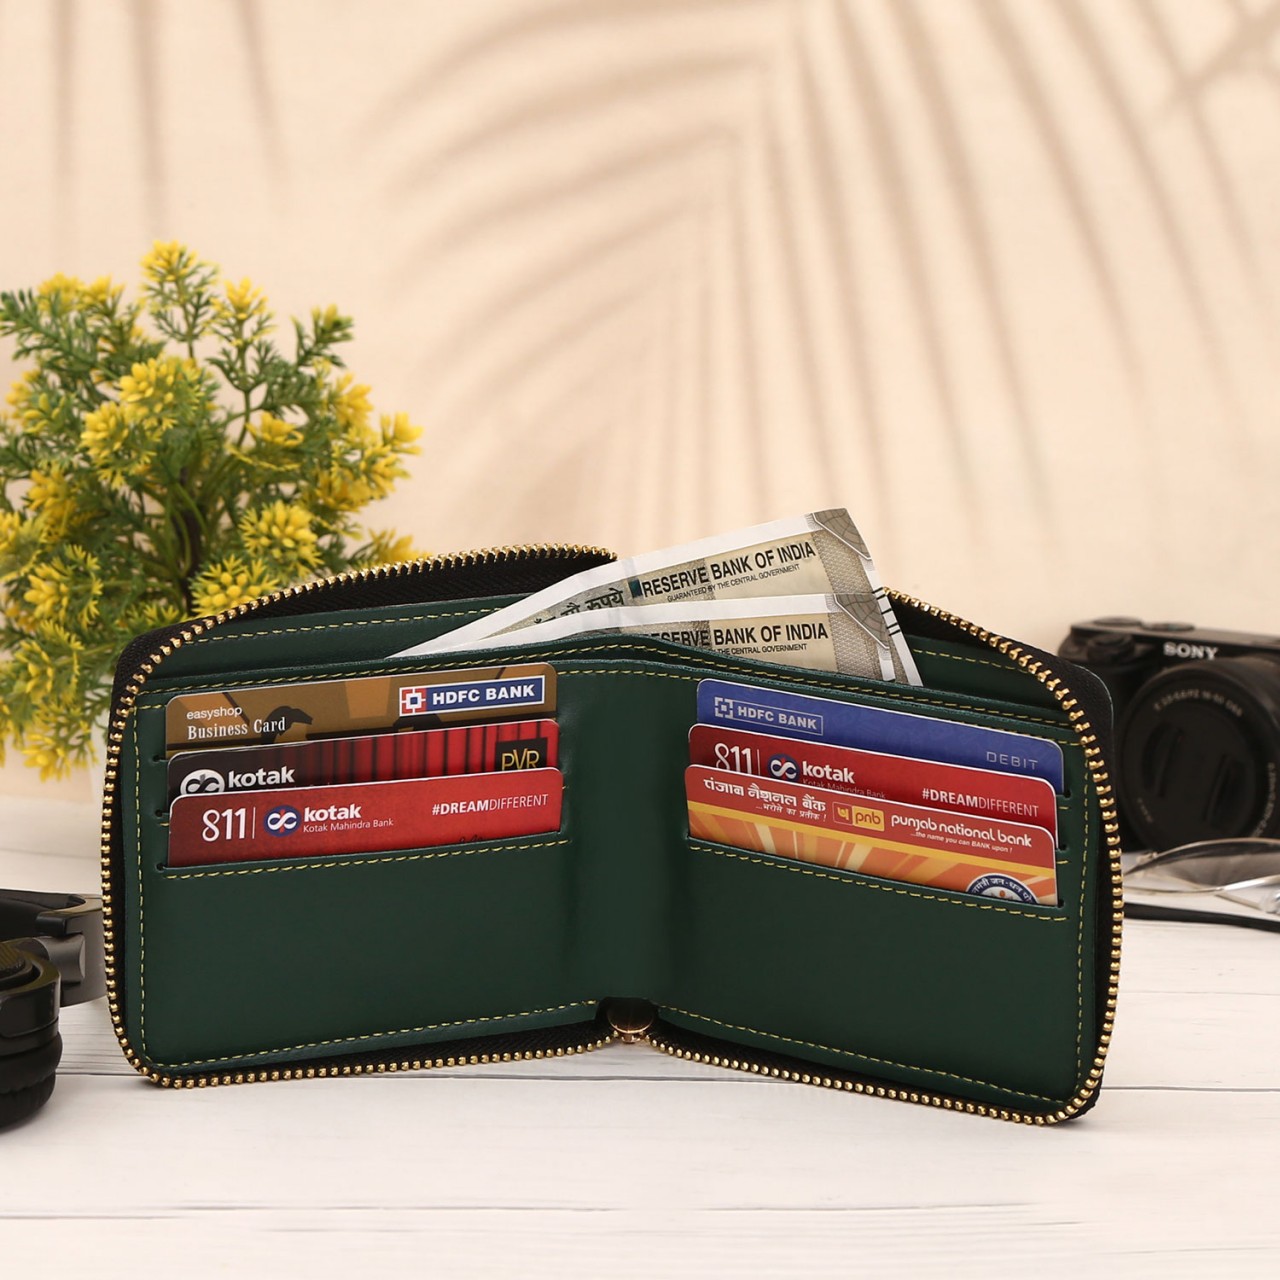 Buy Custom Wallet, Unisex Zipper Wallet, Personalised Wallet